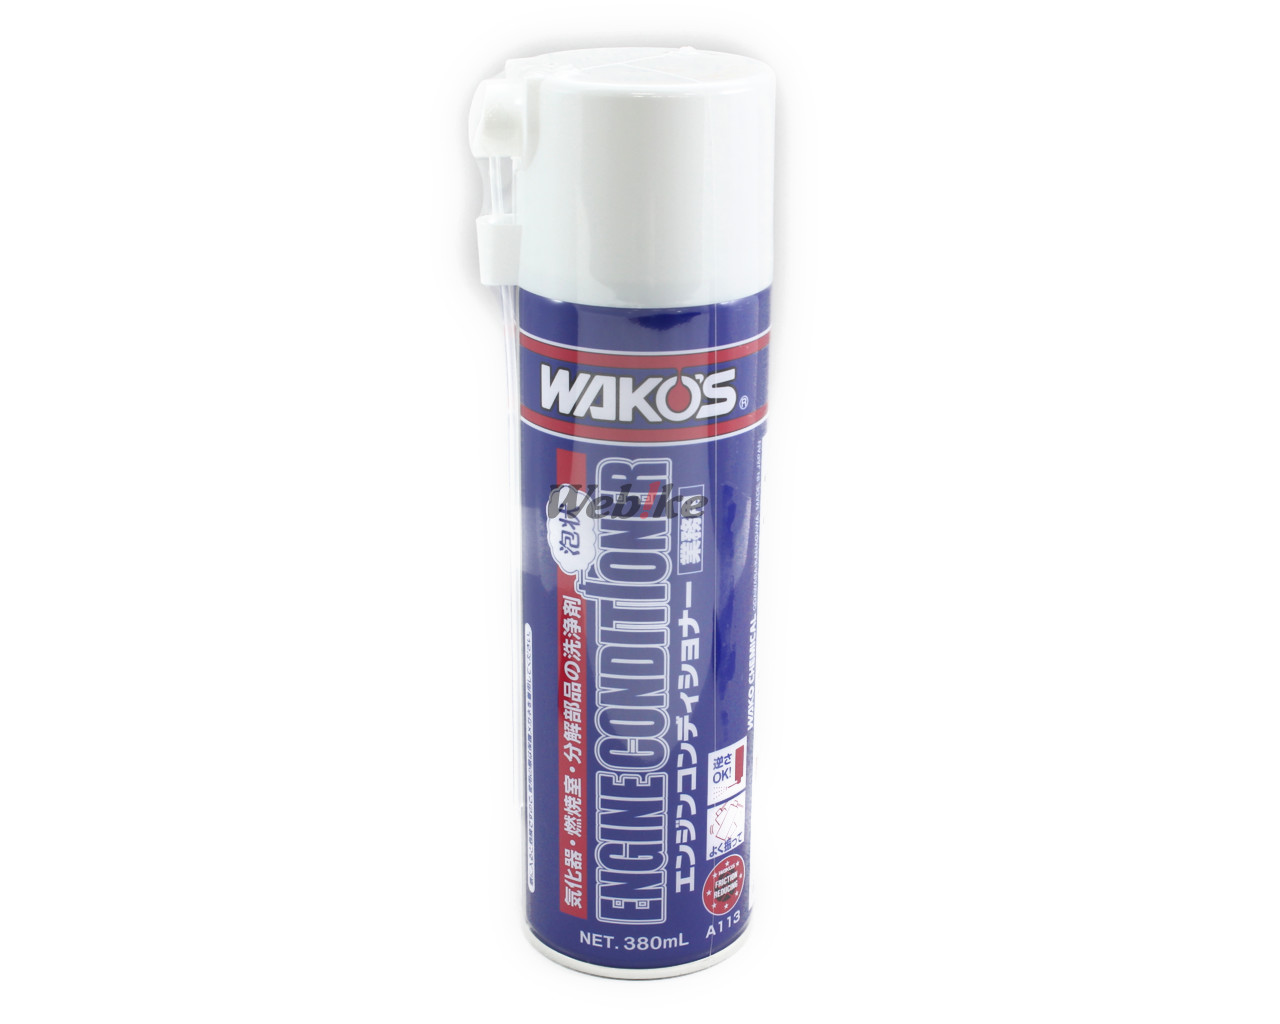 Webike Wakos ワコーズ Ec エンジンコンディショナー A113 洗浄 脱脂ケミカル 通販